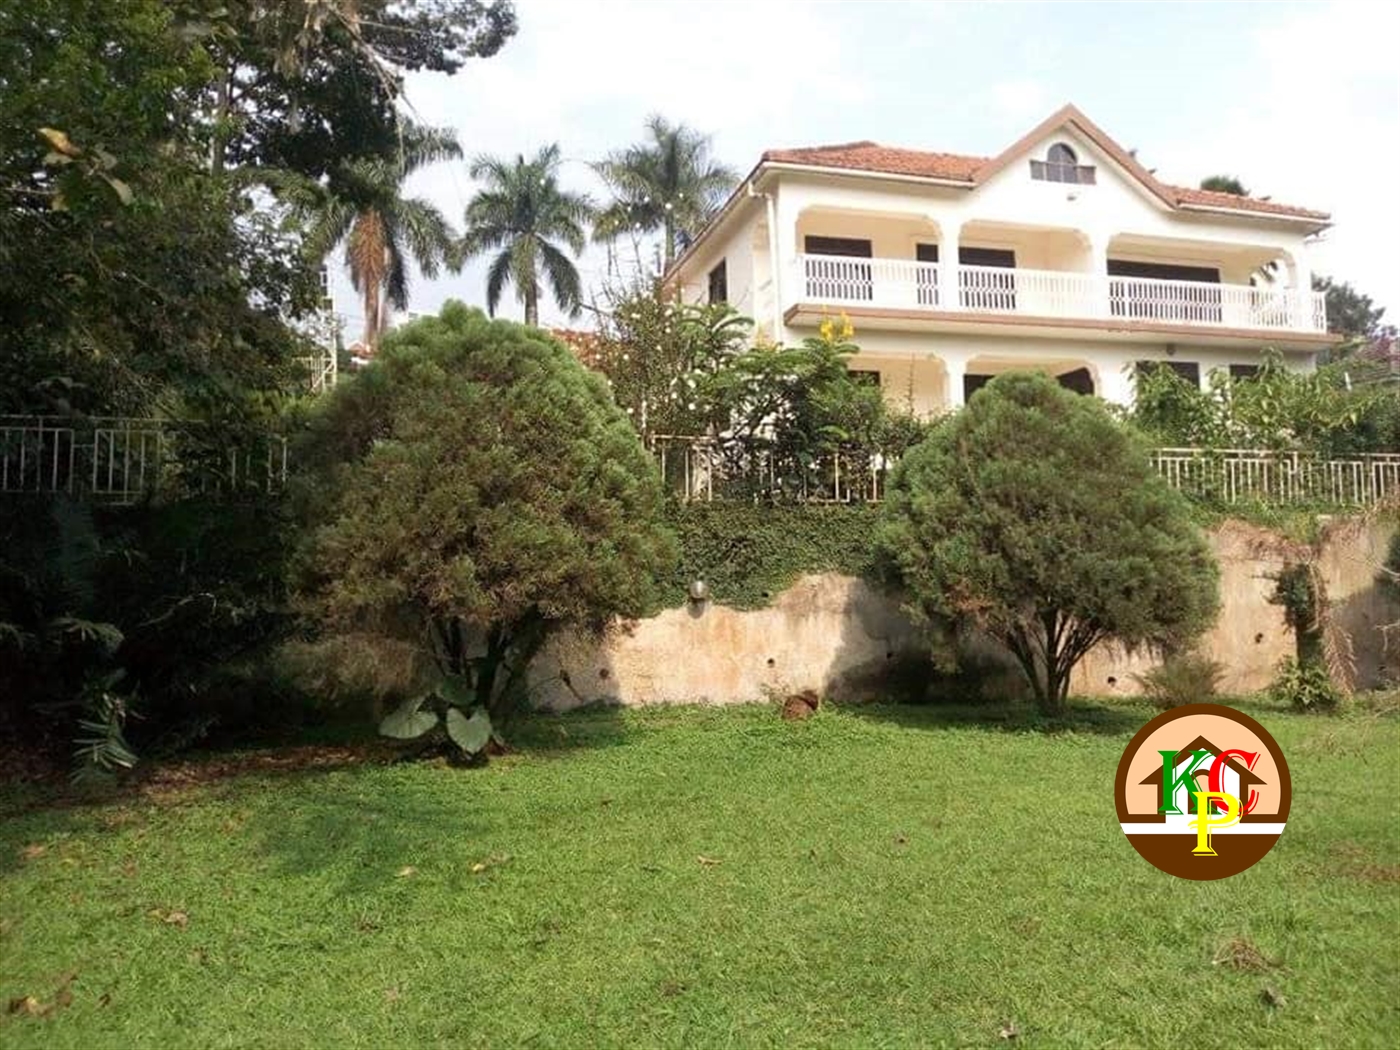 6 Bedroom House For Rent In Naguru Kampala Uganda Code 676 08 10 22